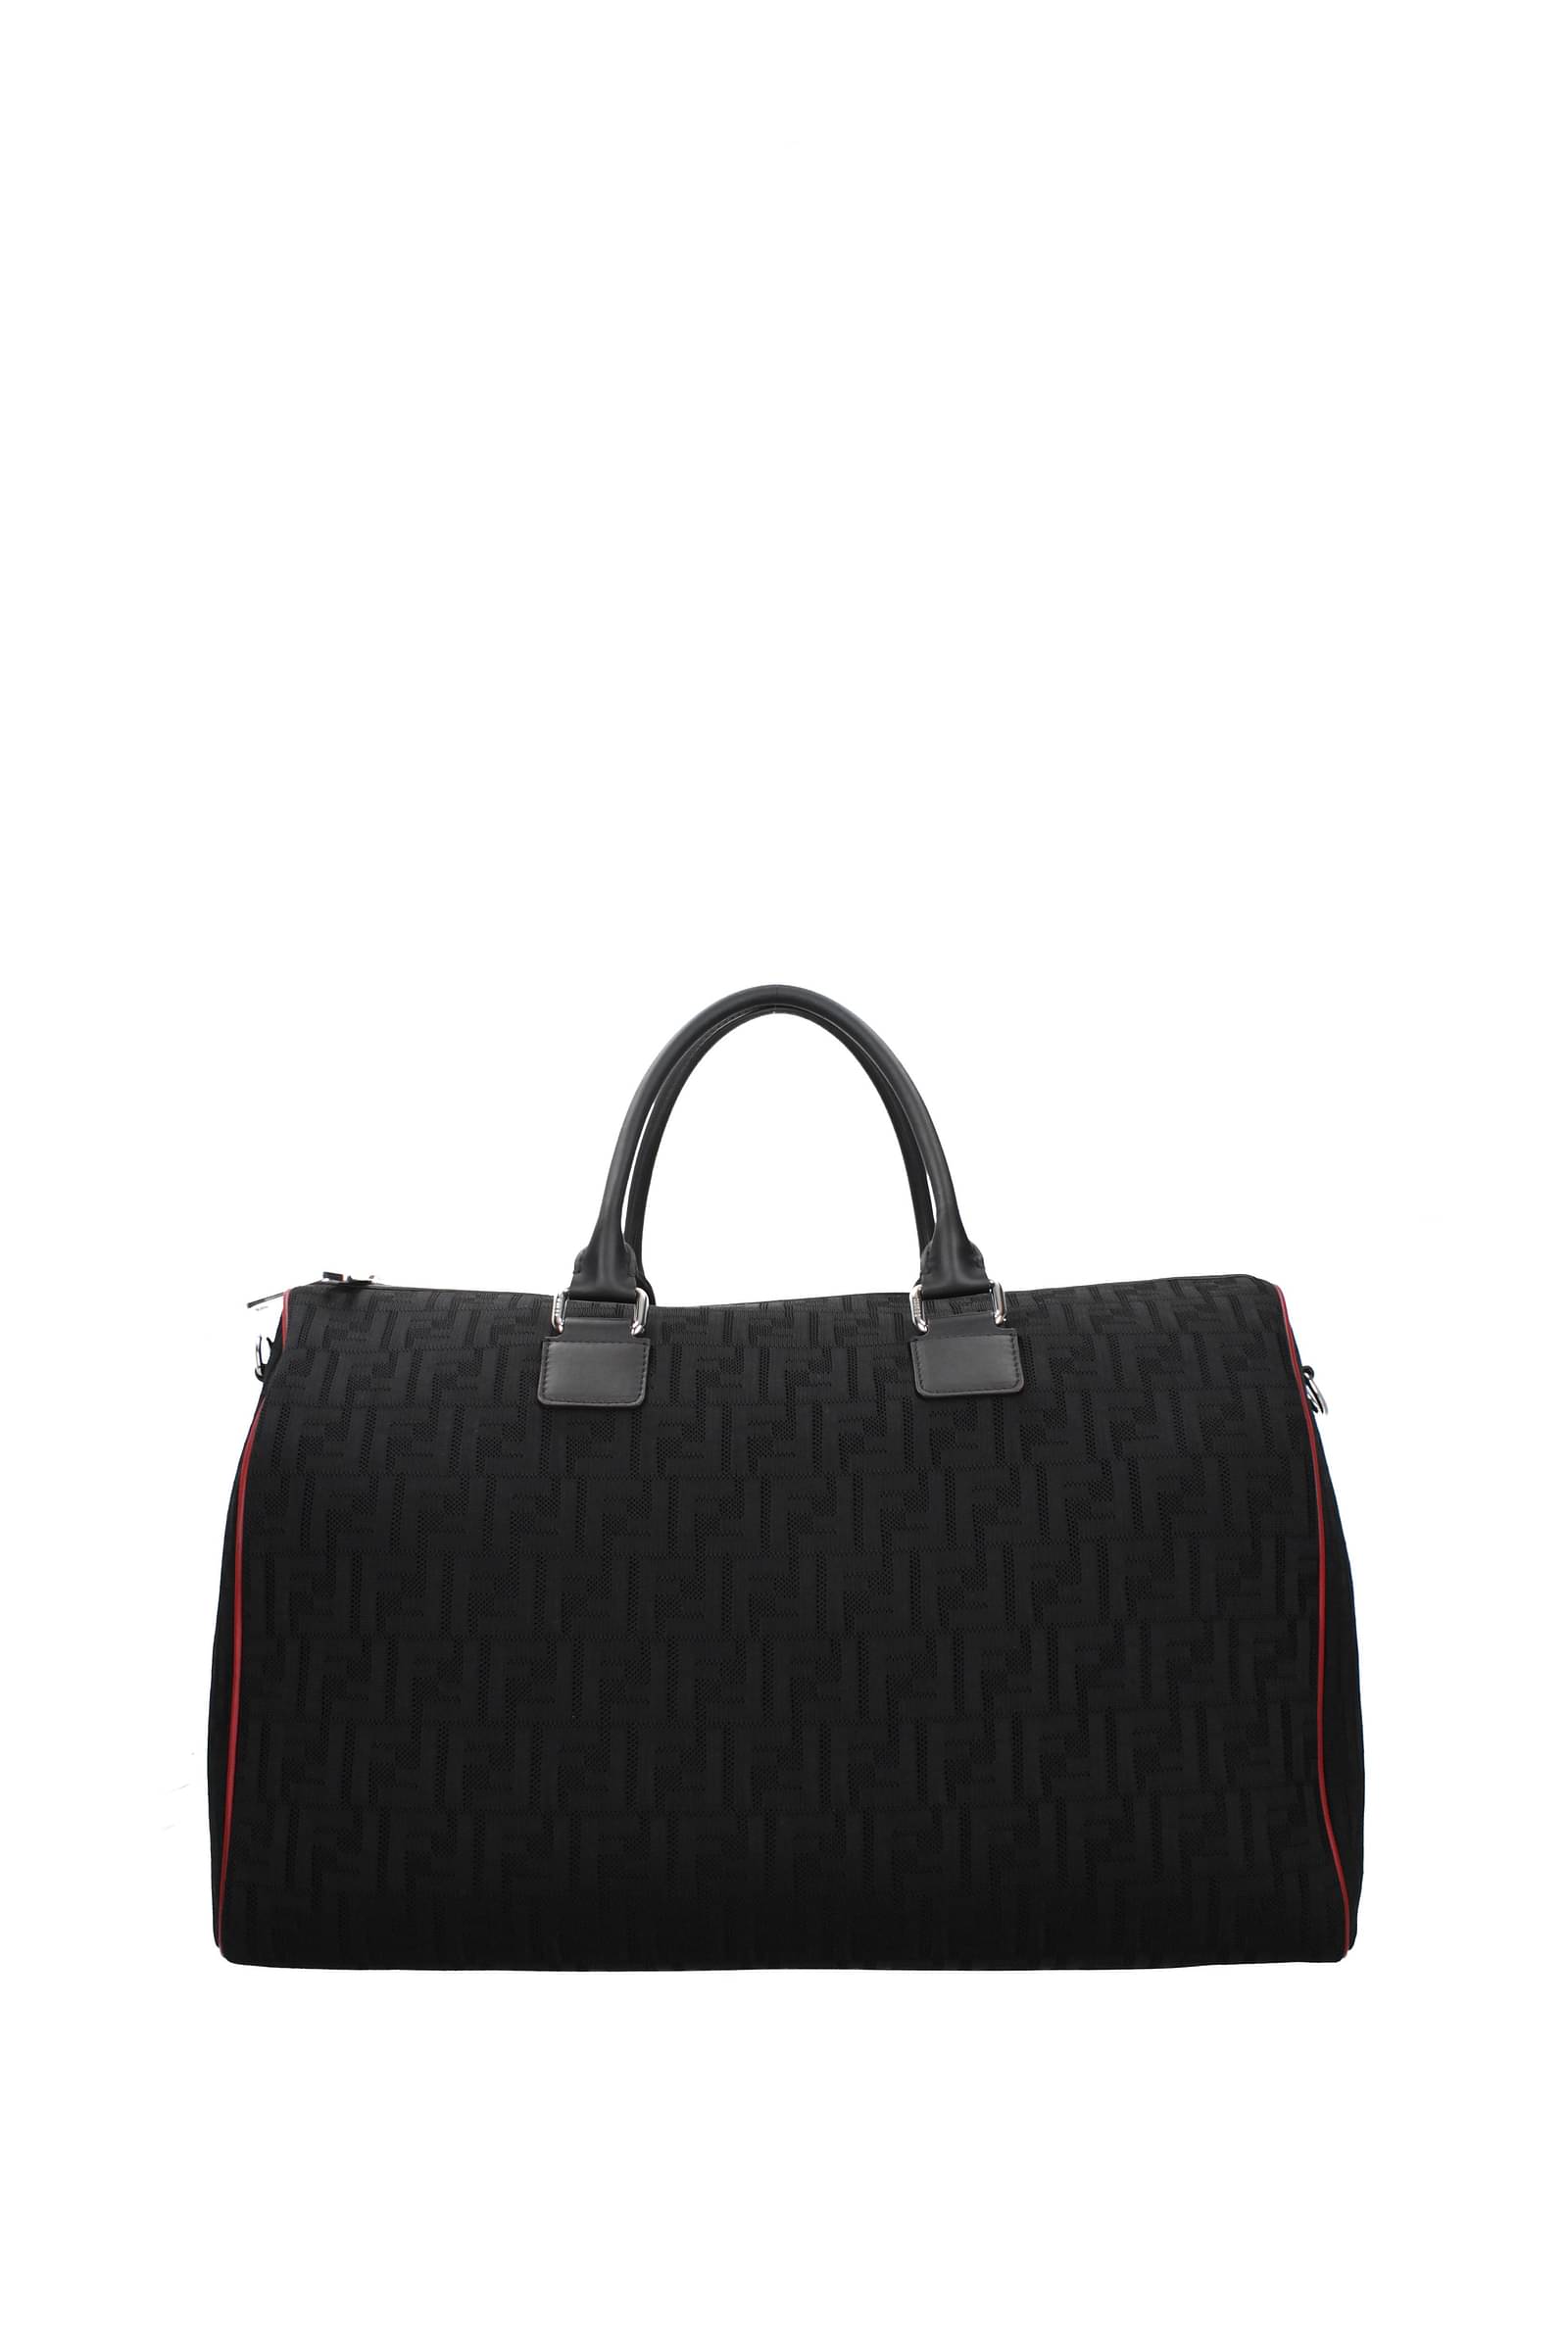 Fendi Patent Leather B Buckle Bag - FINAL SALE | Fendi Handbags | Bag  Borrow or Steal